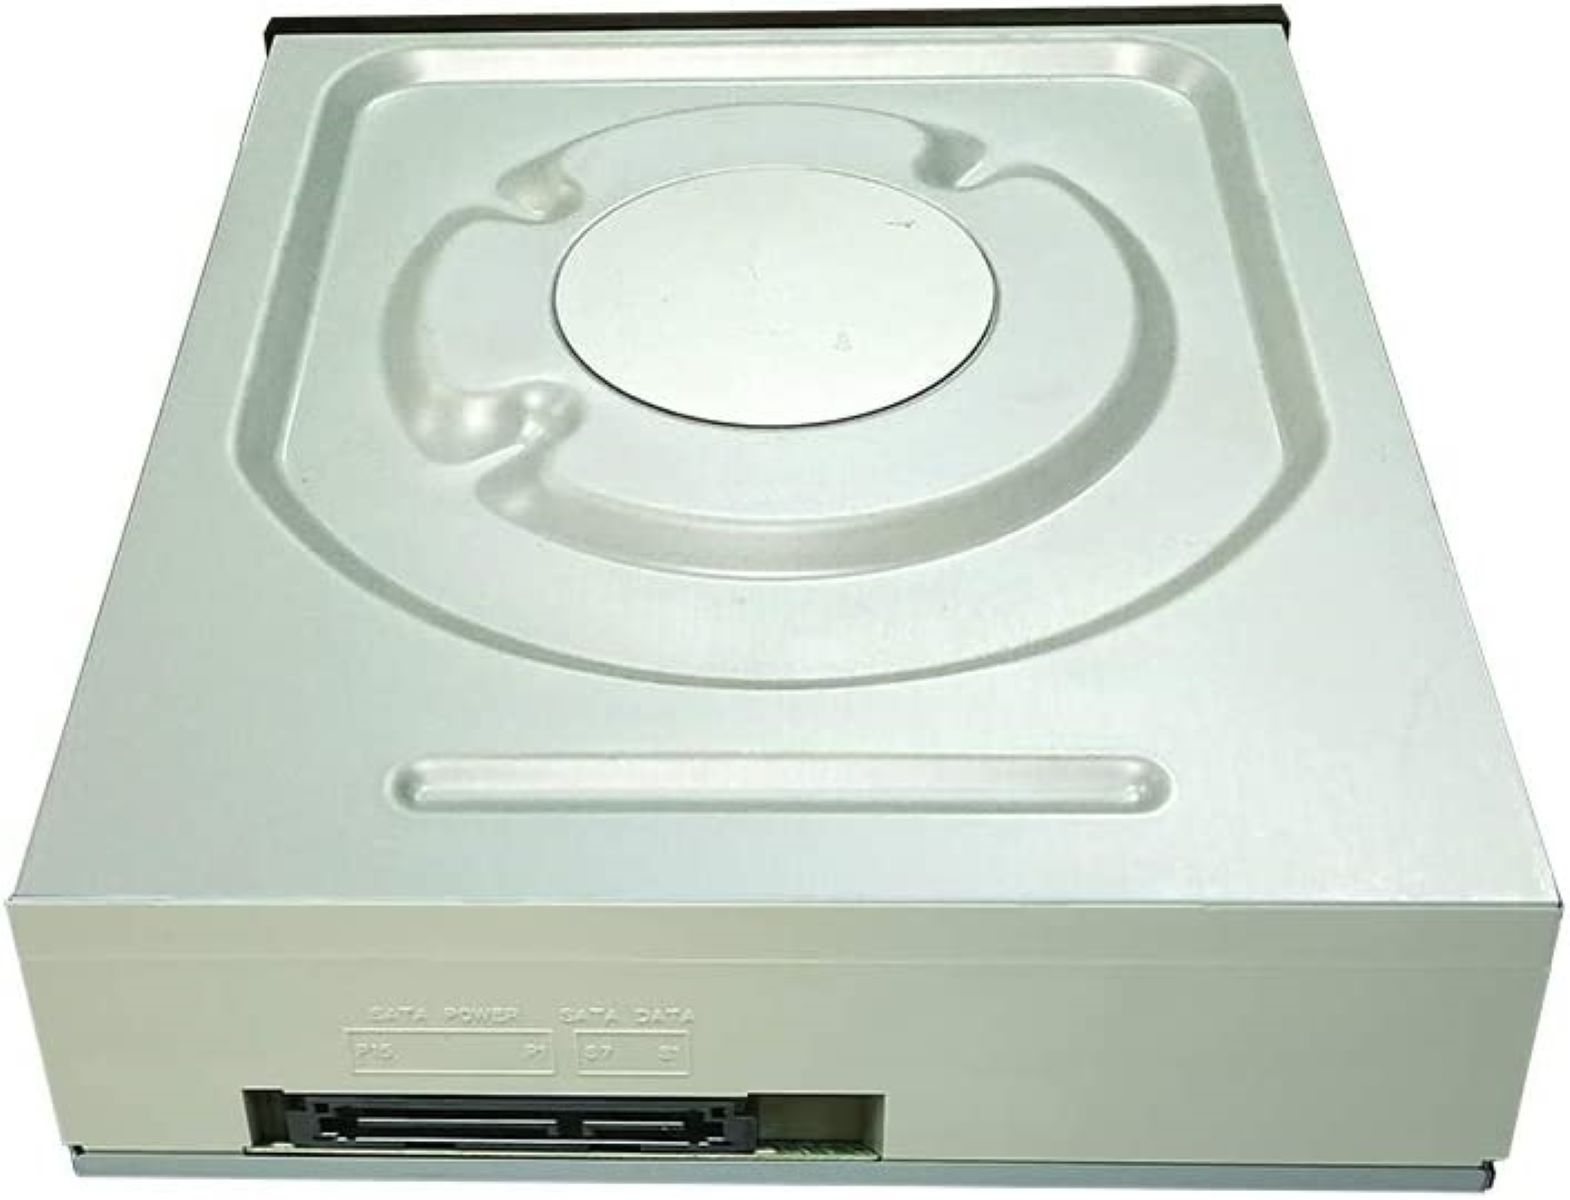 Brenner PX-891SAF PIODATA intern DVD Plextor